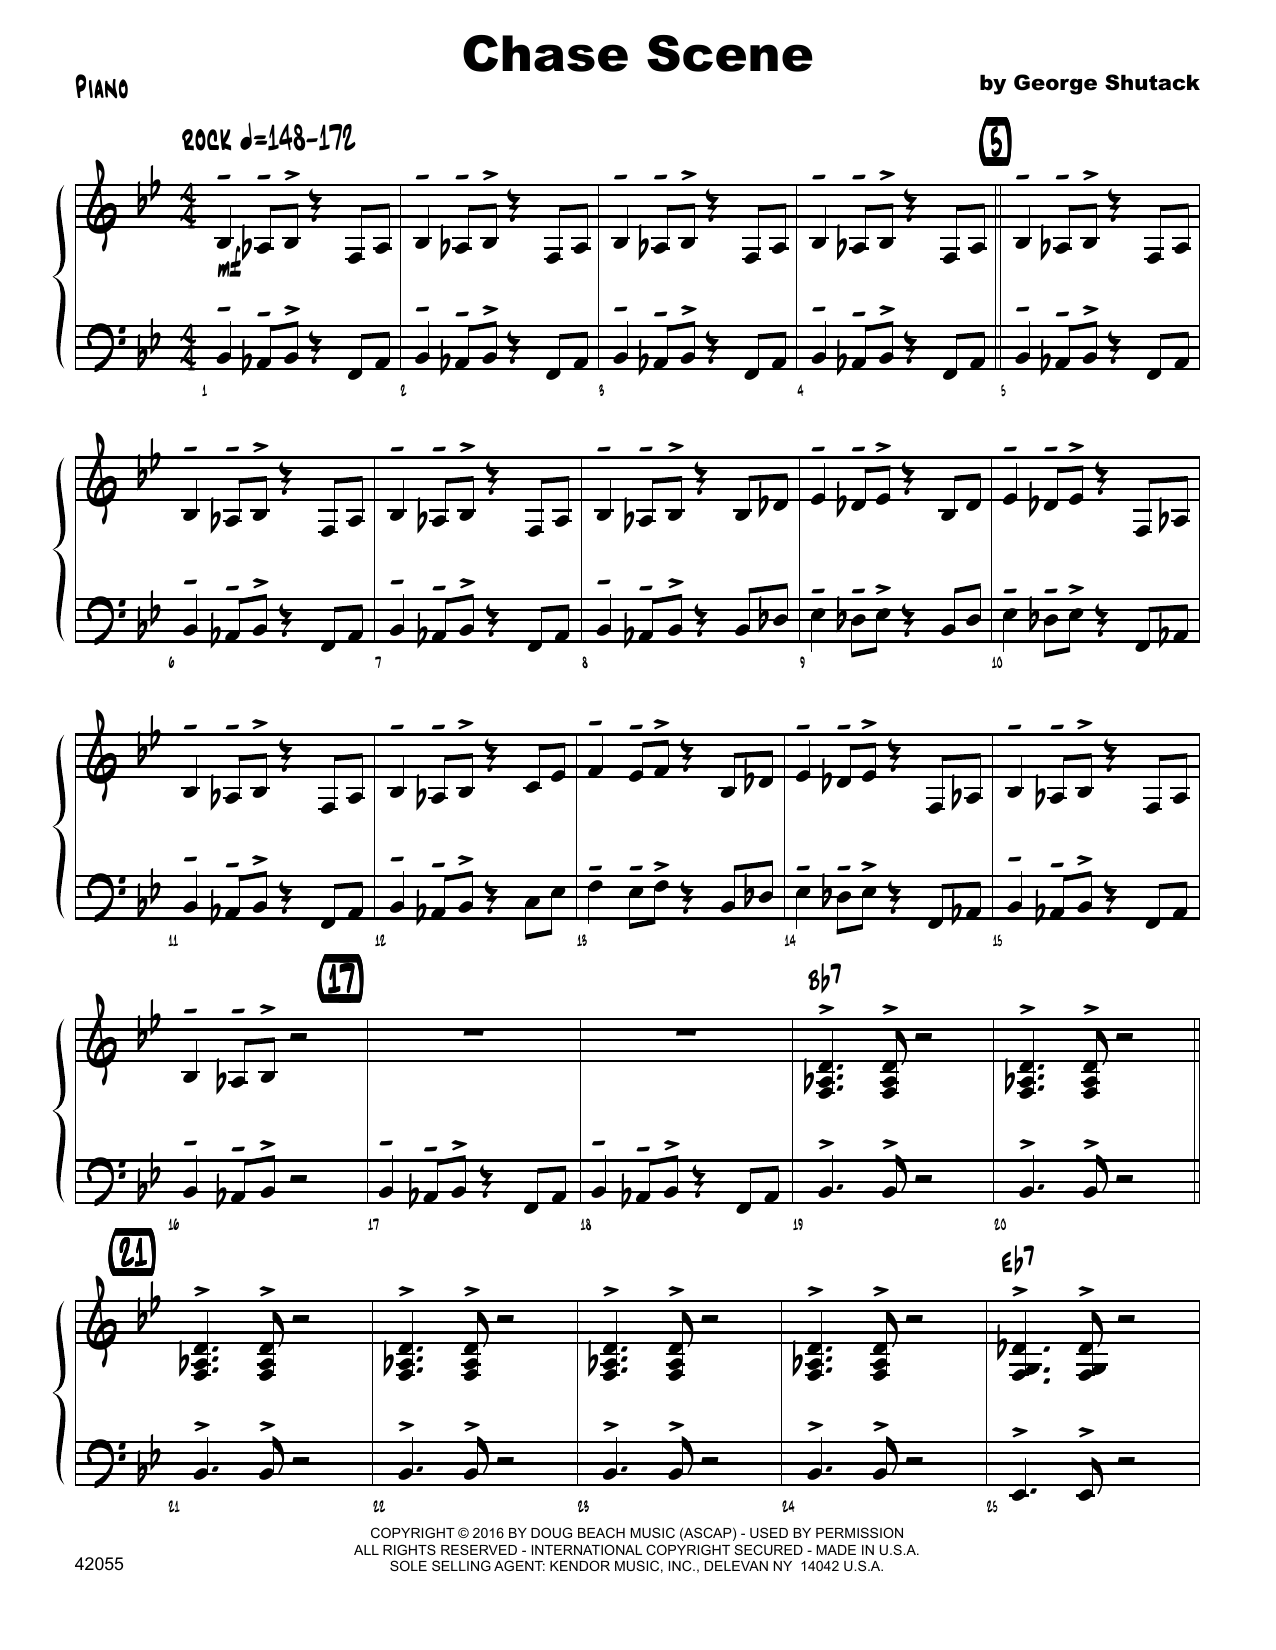 Download George Shutack Chase Scene - Piano Sheet Music